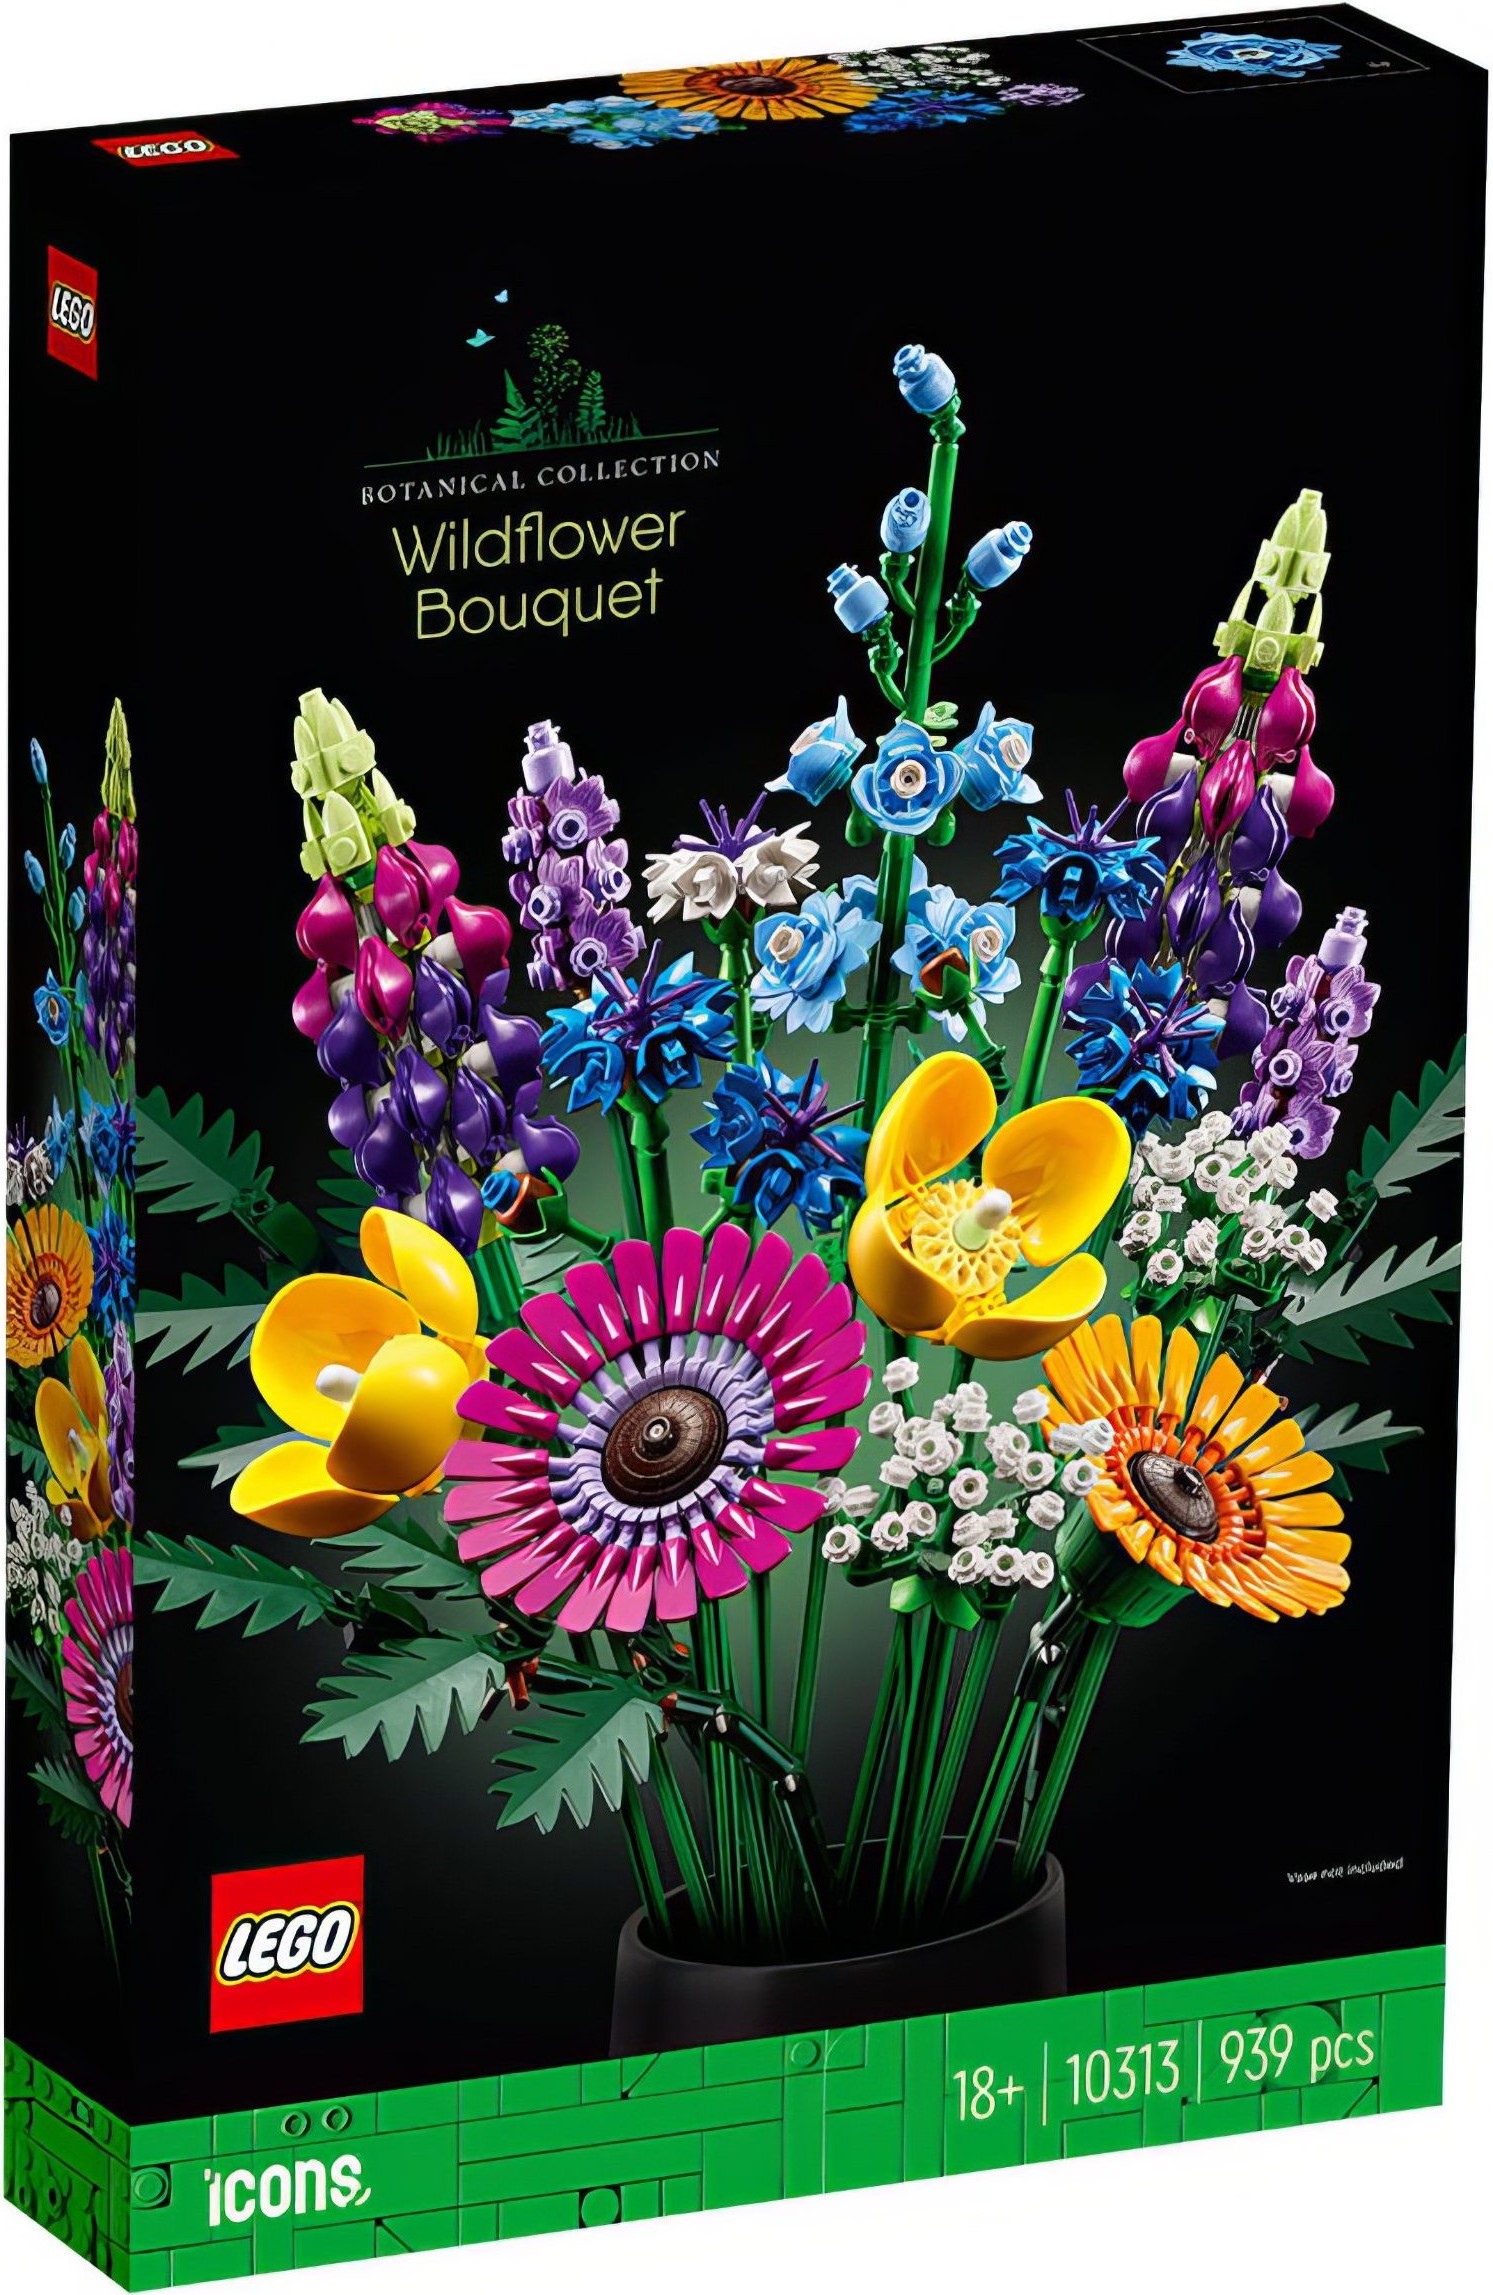 https://www.thebrickfan.com/wp-content/uploads/2023/01/LEGO-Botanical-Collection-Wildflower-Bouquet-10313.jpg